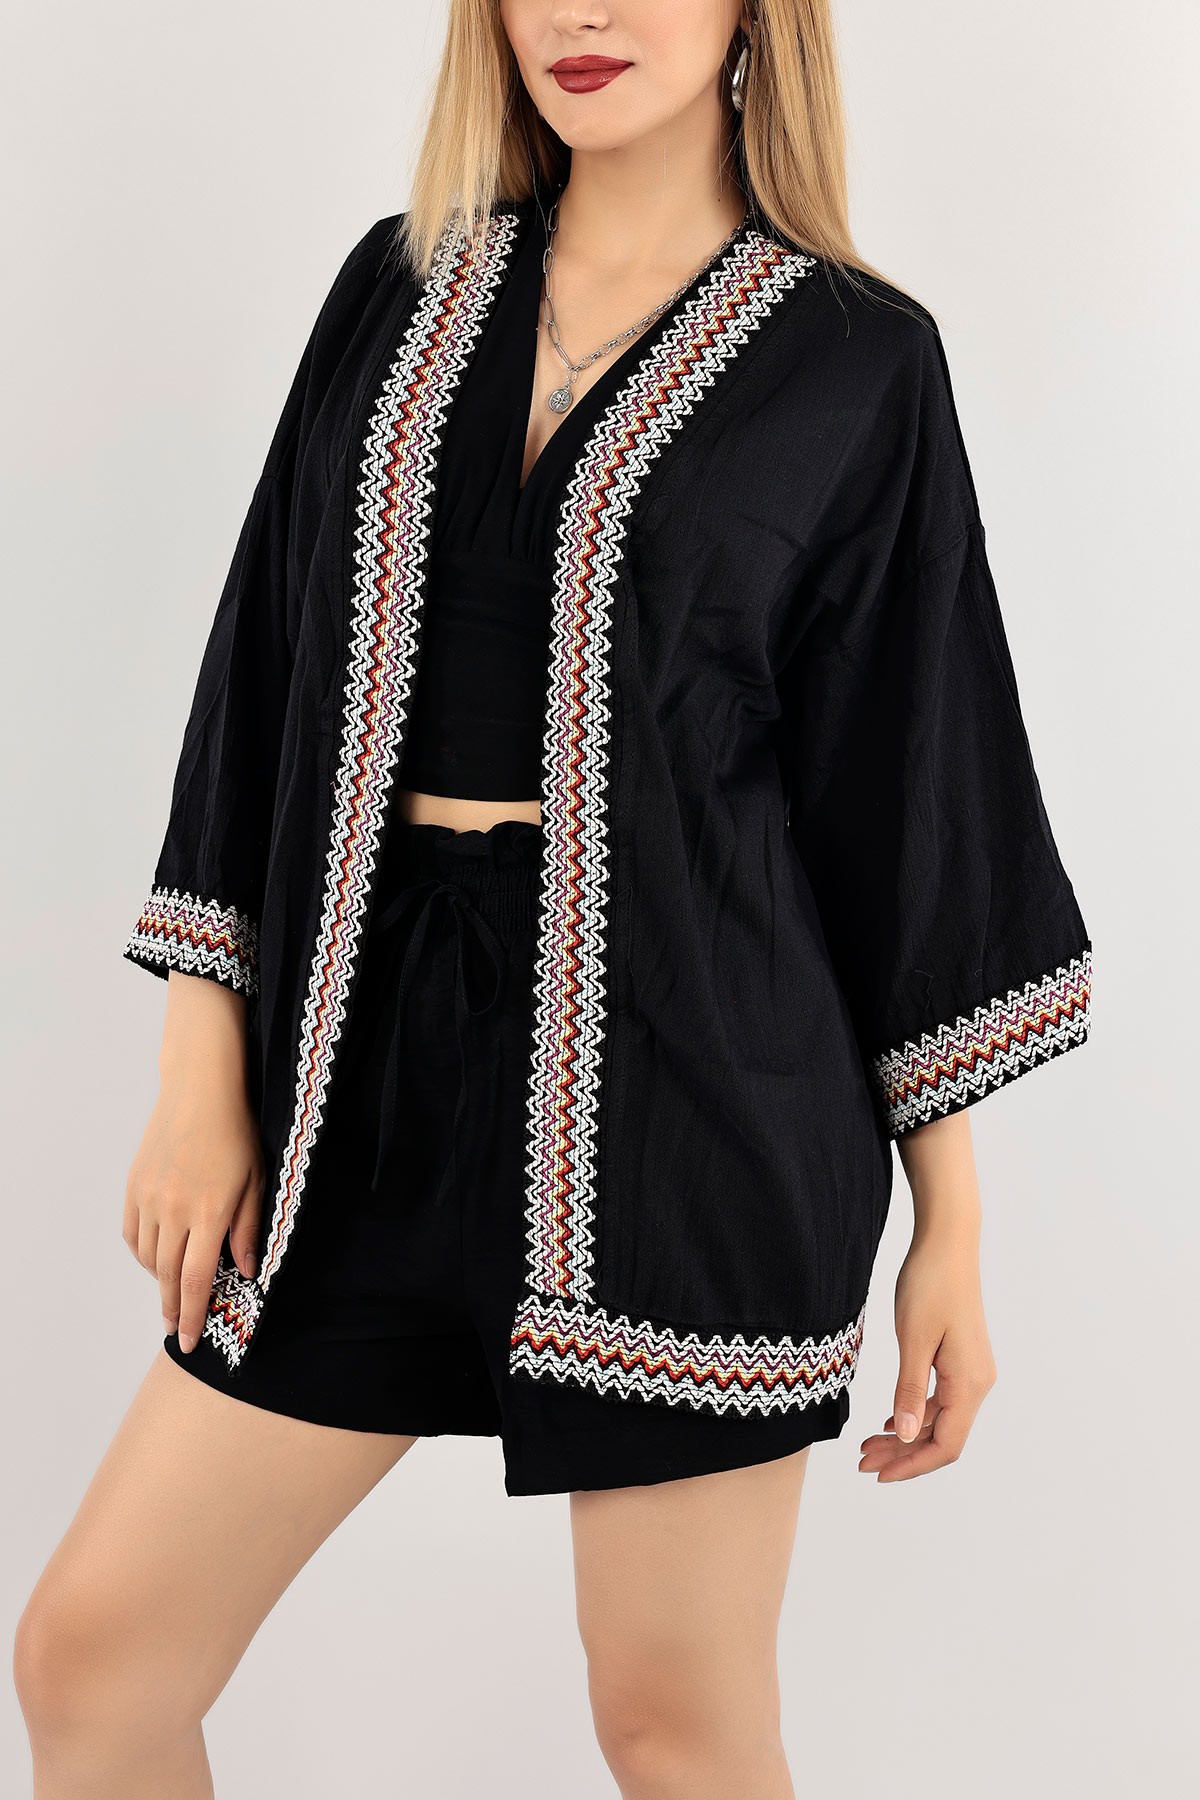 Siyah Güpürlü Keten Kimono Hırka 115216